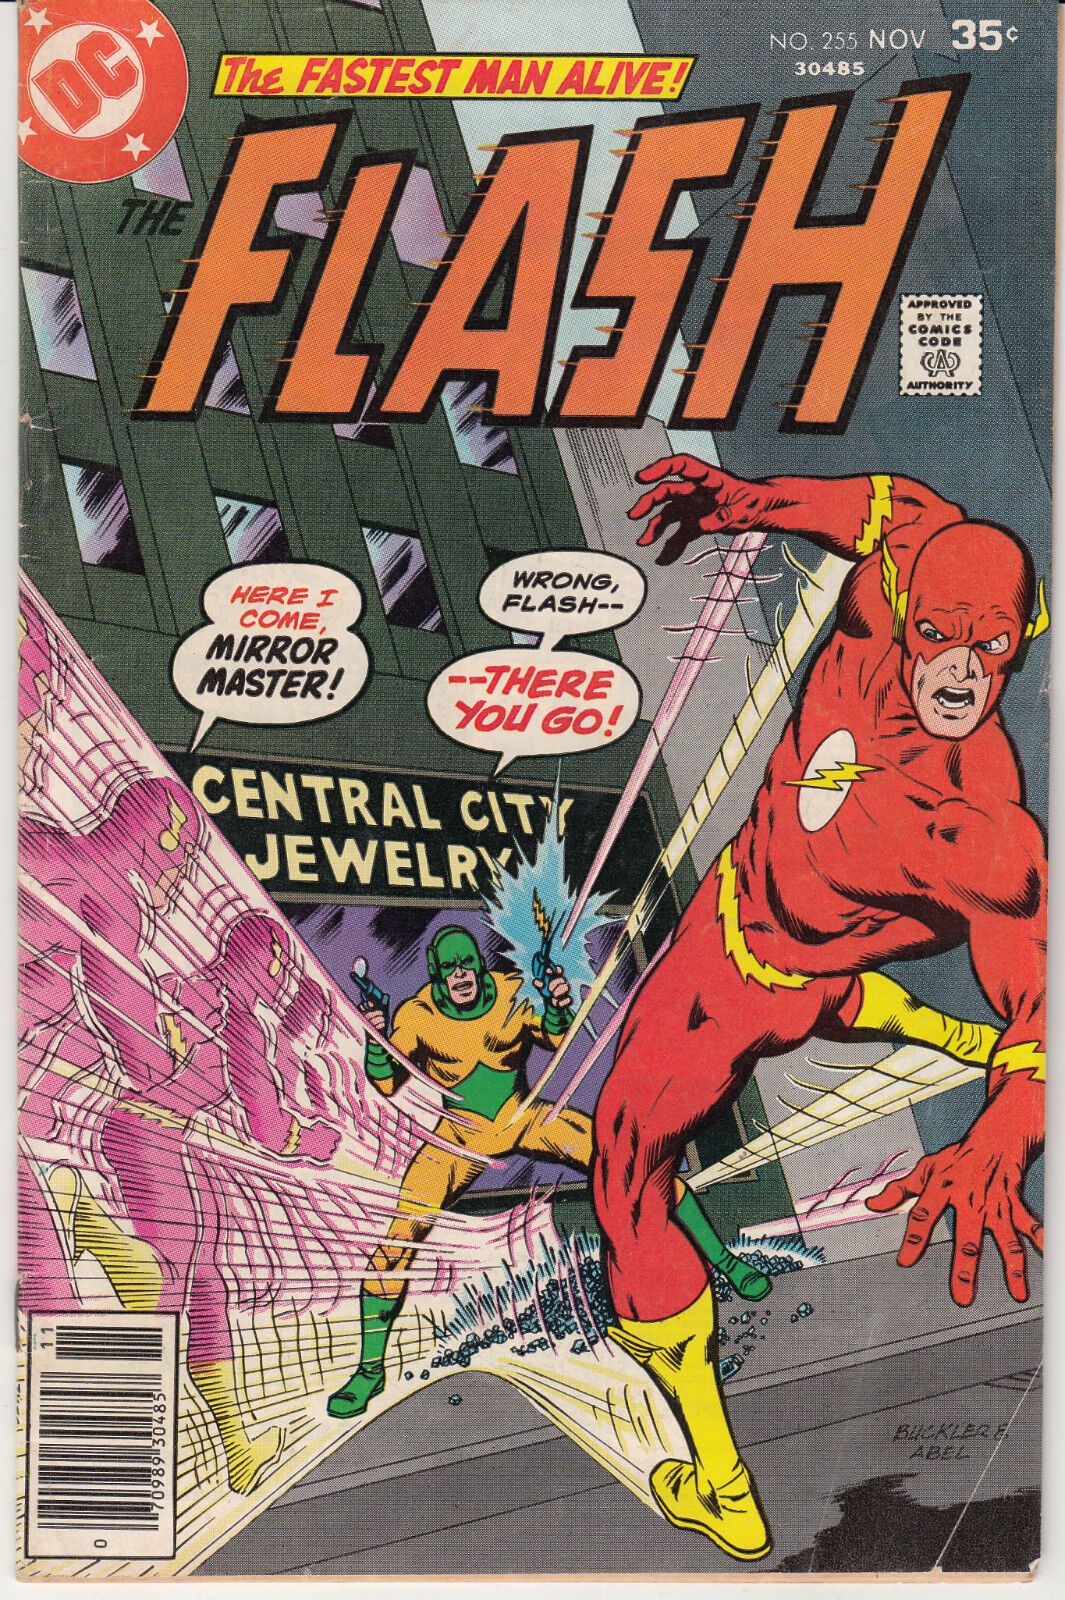 1977 DC Comics The Flash #255